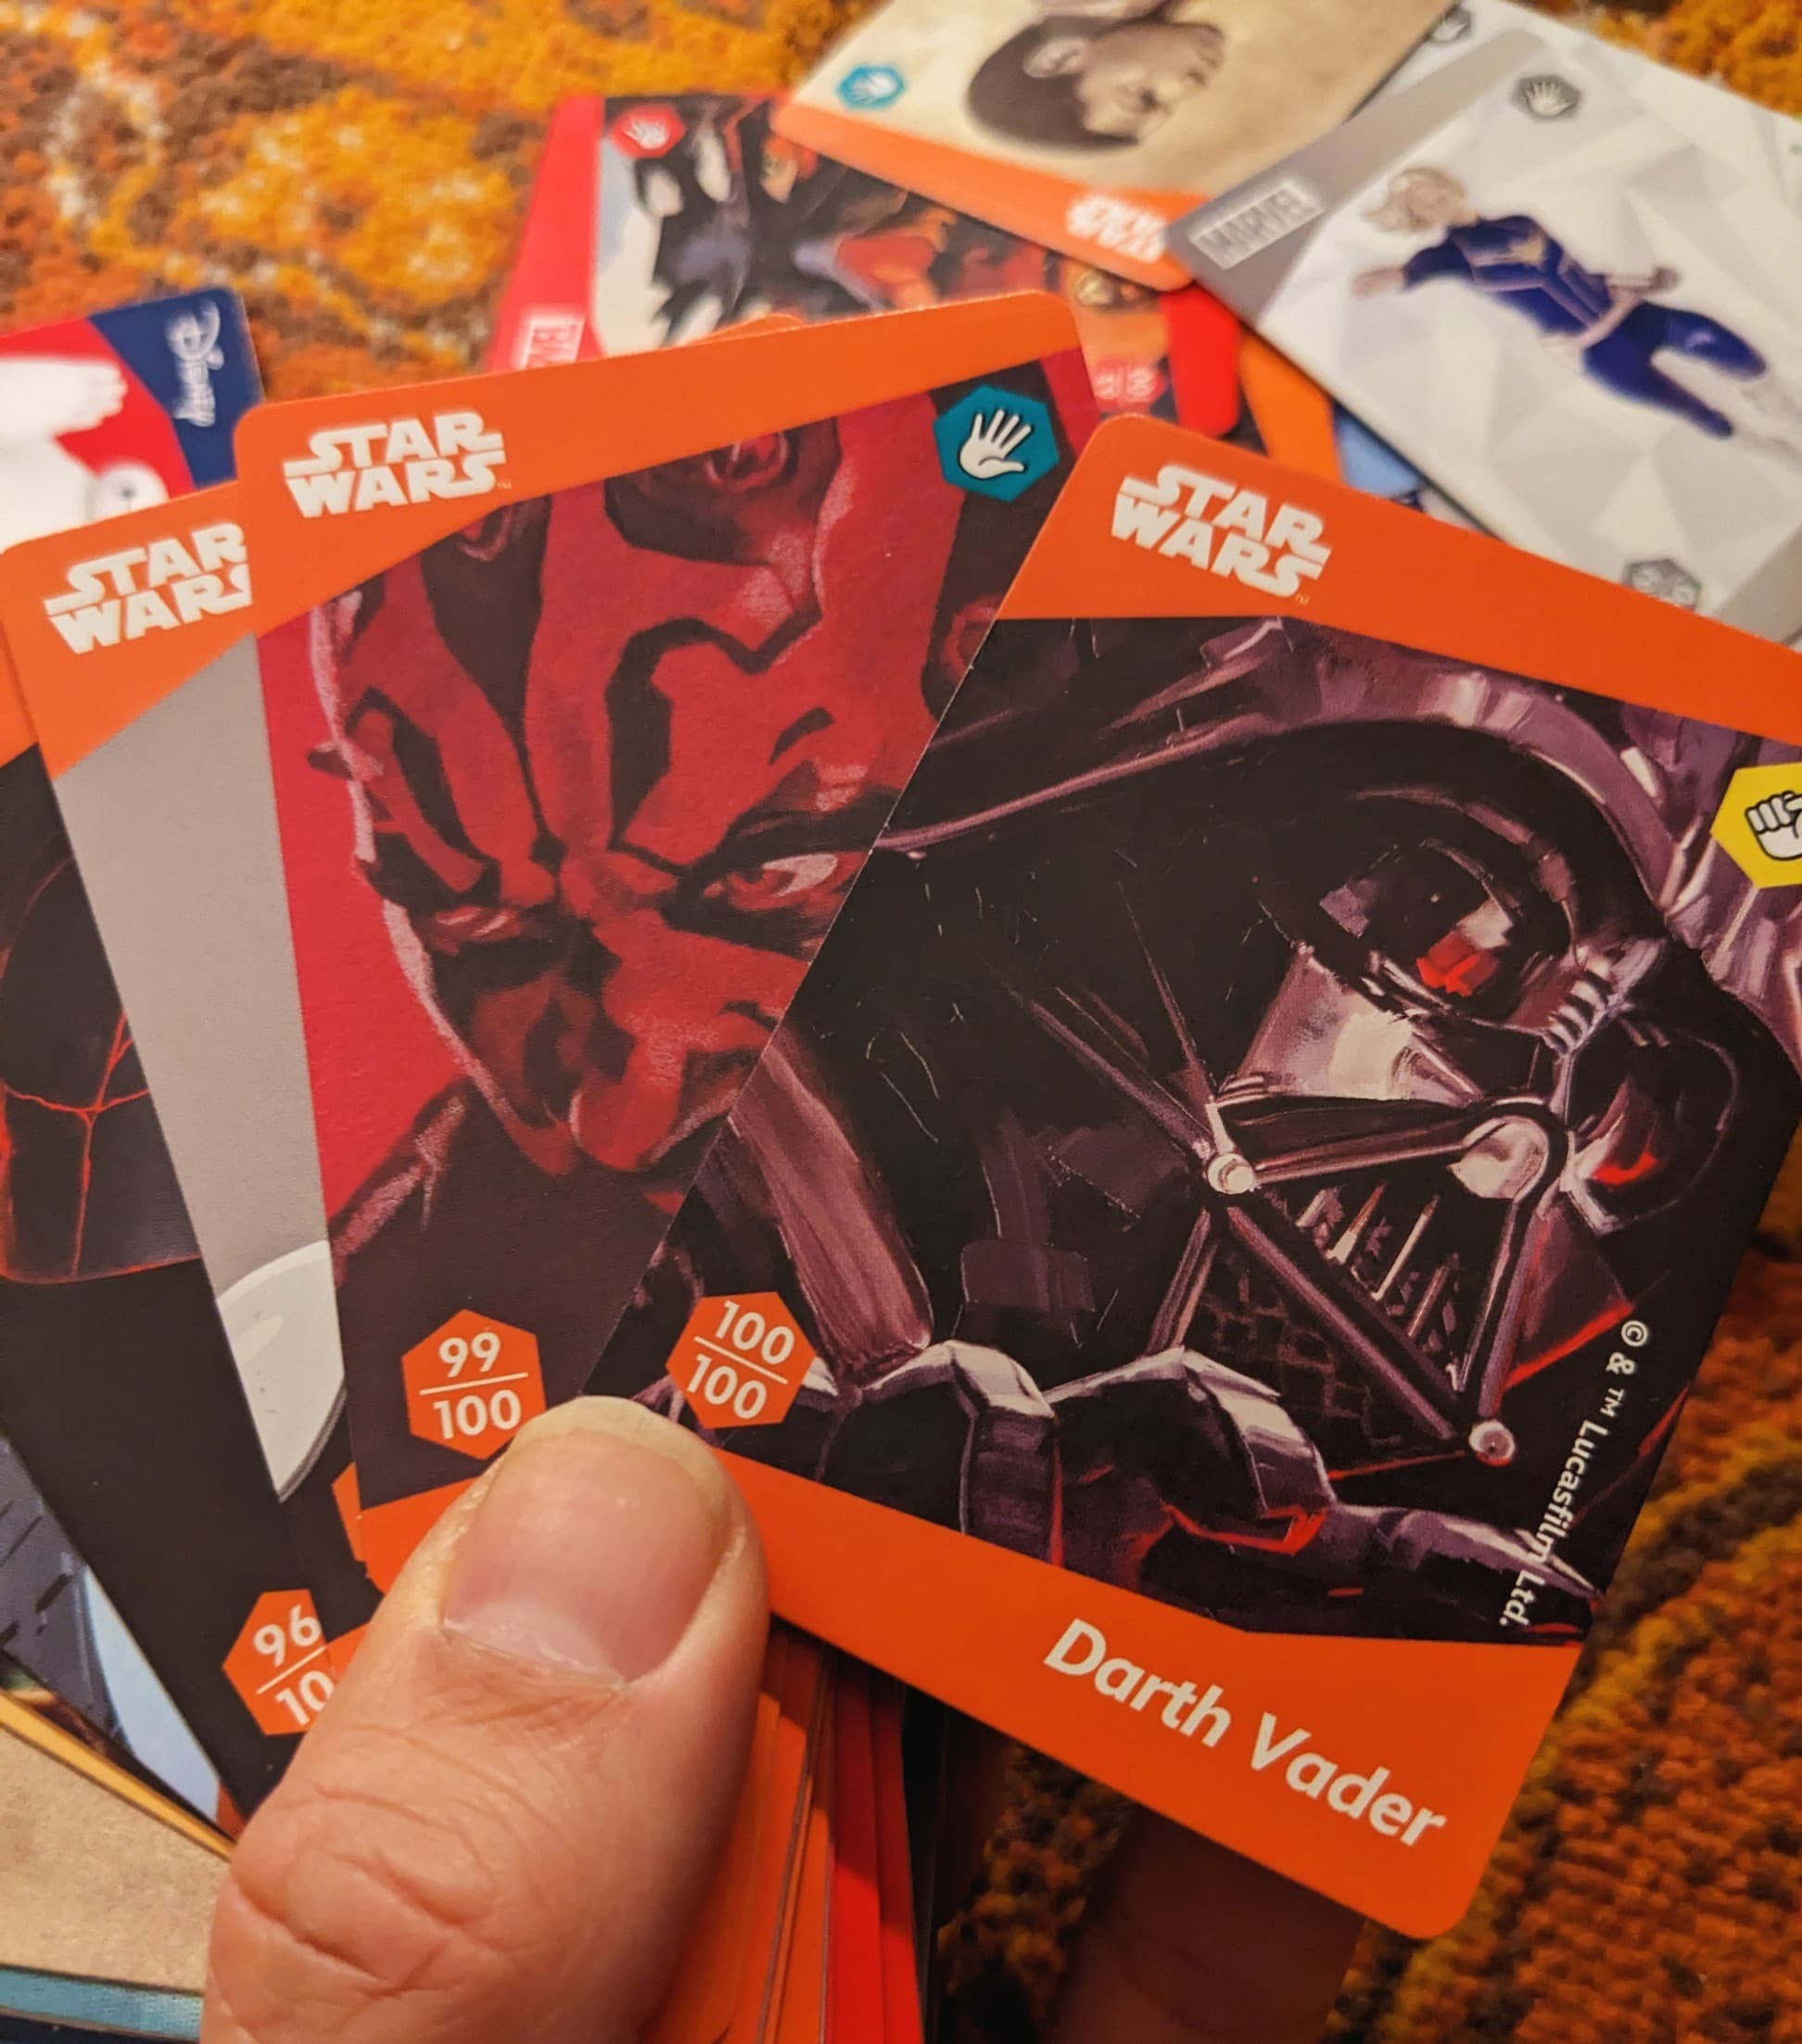 Disney cards featuring Darth Vader.